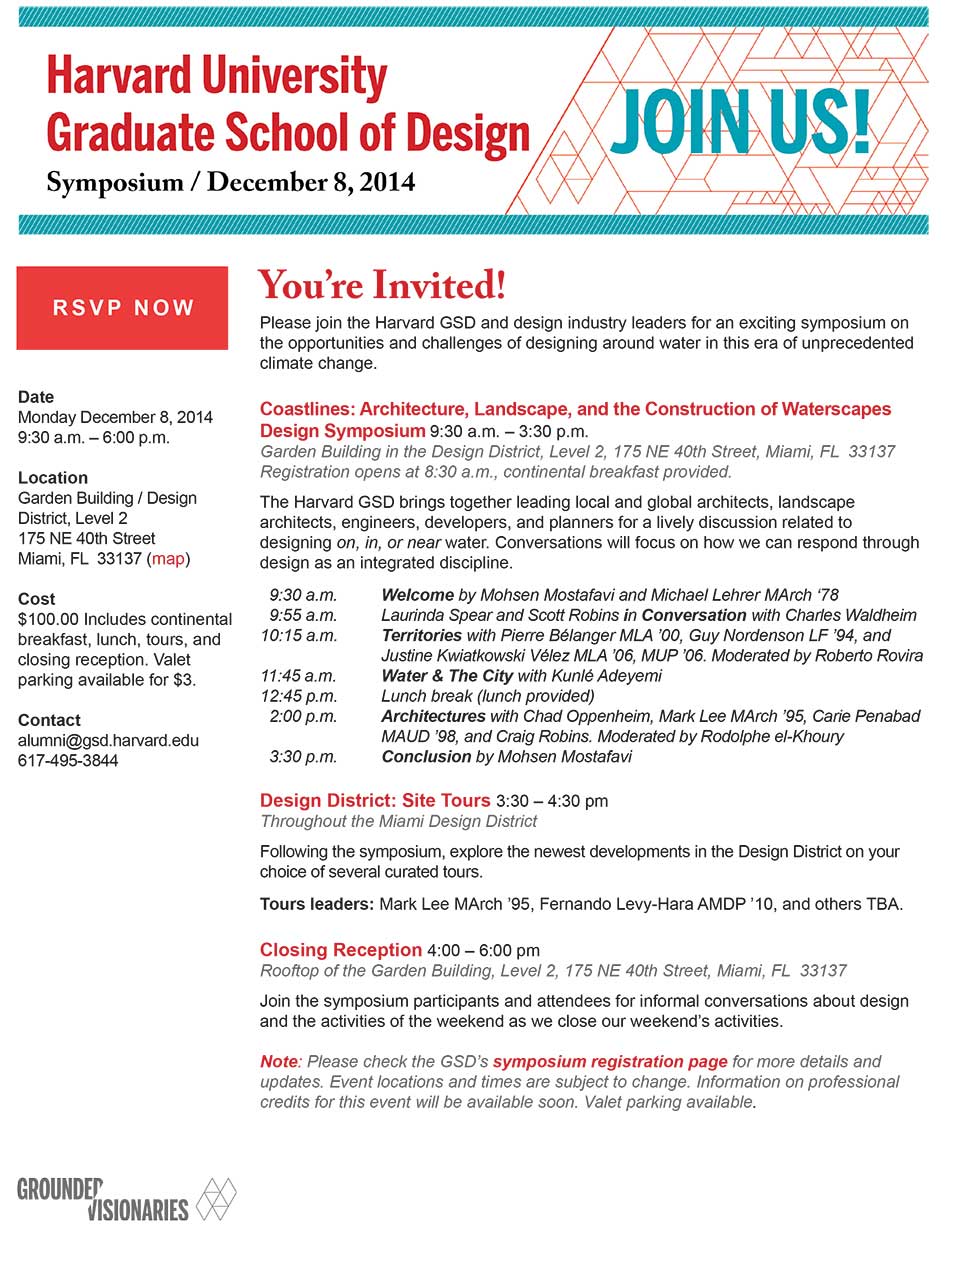 Harvard-GSD-symposium_Miami-December-8_lr_960